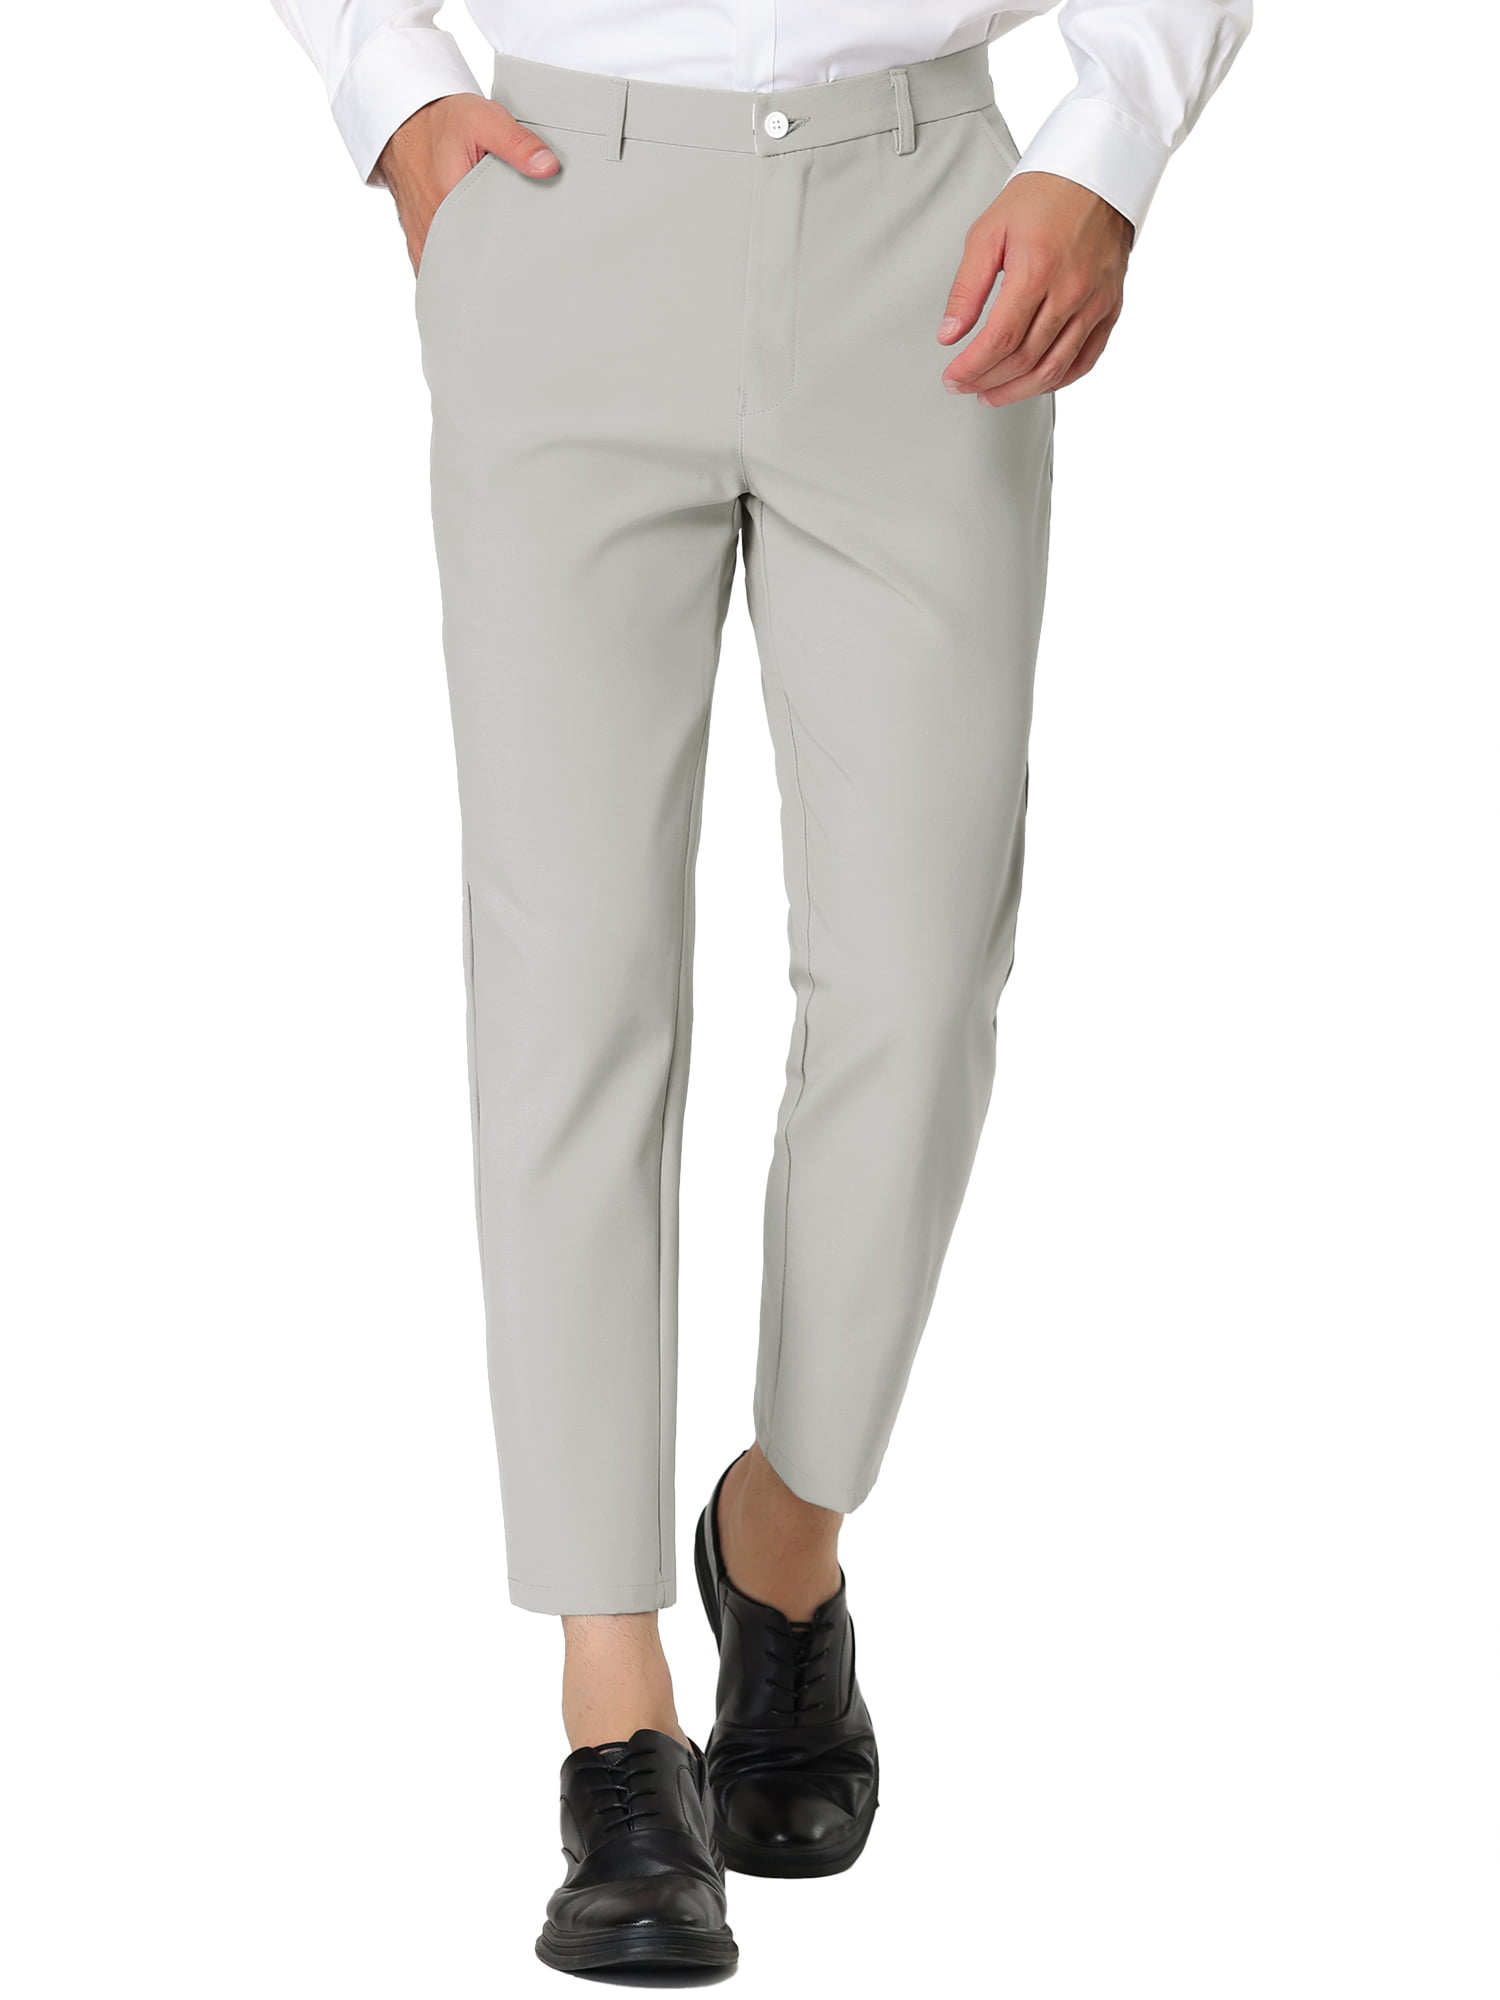 MODA NOVA Big & Tall Men's Cropped Pants Slim Fit Ankle-Length Dress Pants  White LT(US 34) 